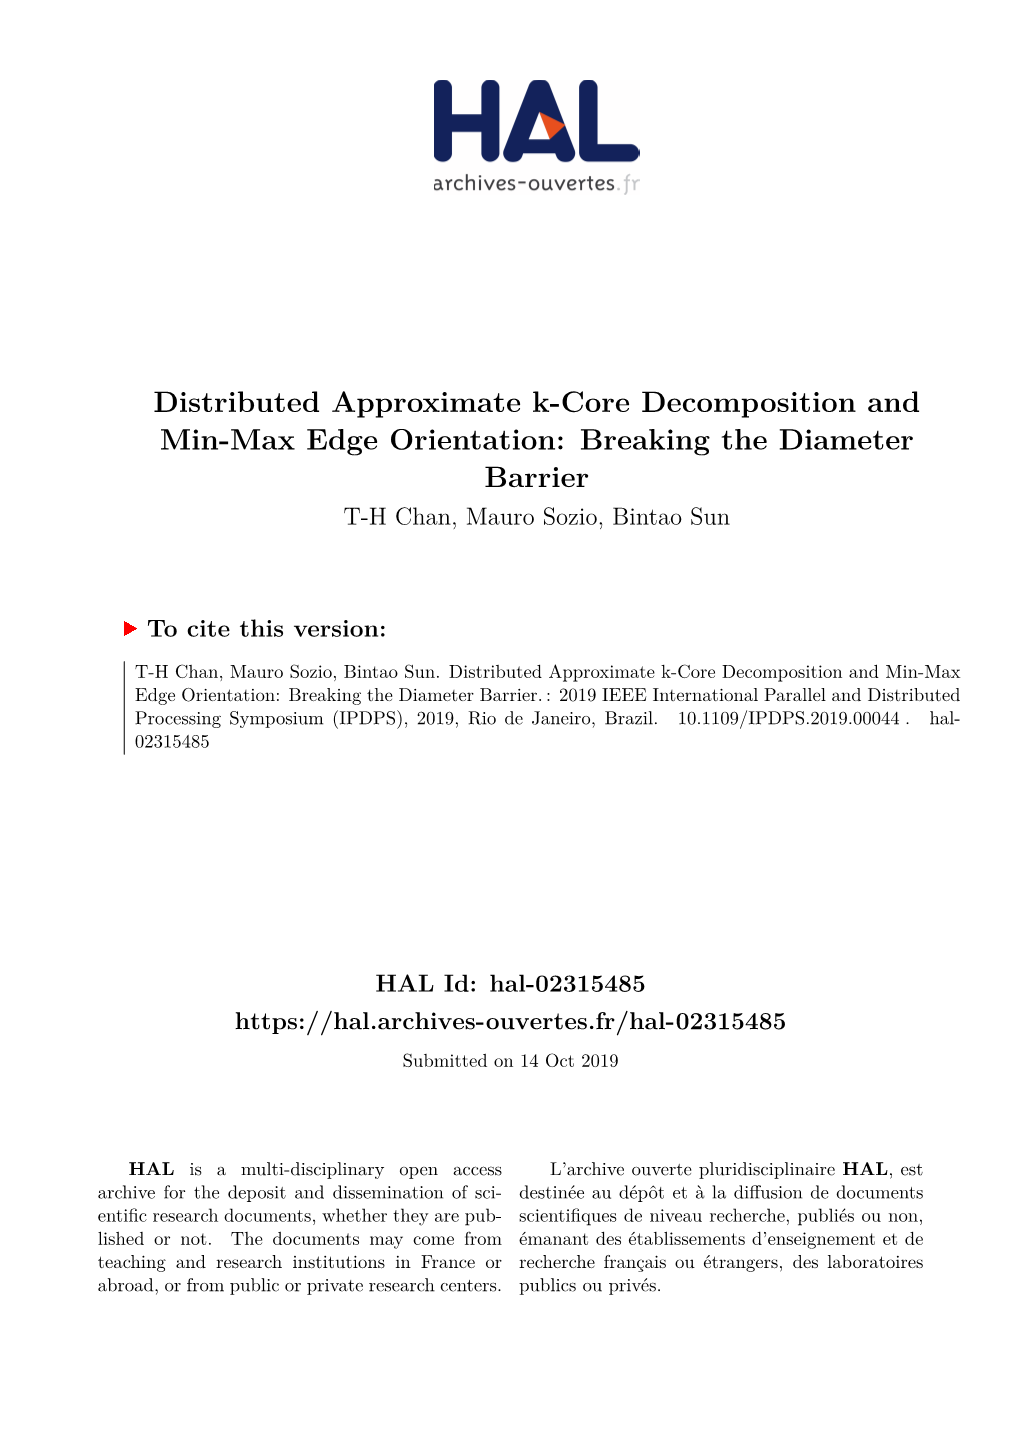 Distributed Approximate K-Core Decomposition and Min-Max Edge Orientation: Breaking the Diameter Barrier T-H Chan, Mauro Sozio, Bintao Sun